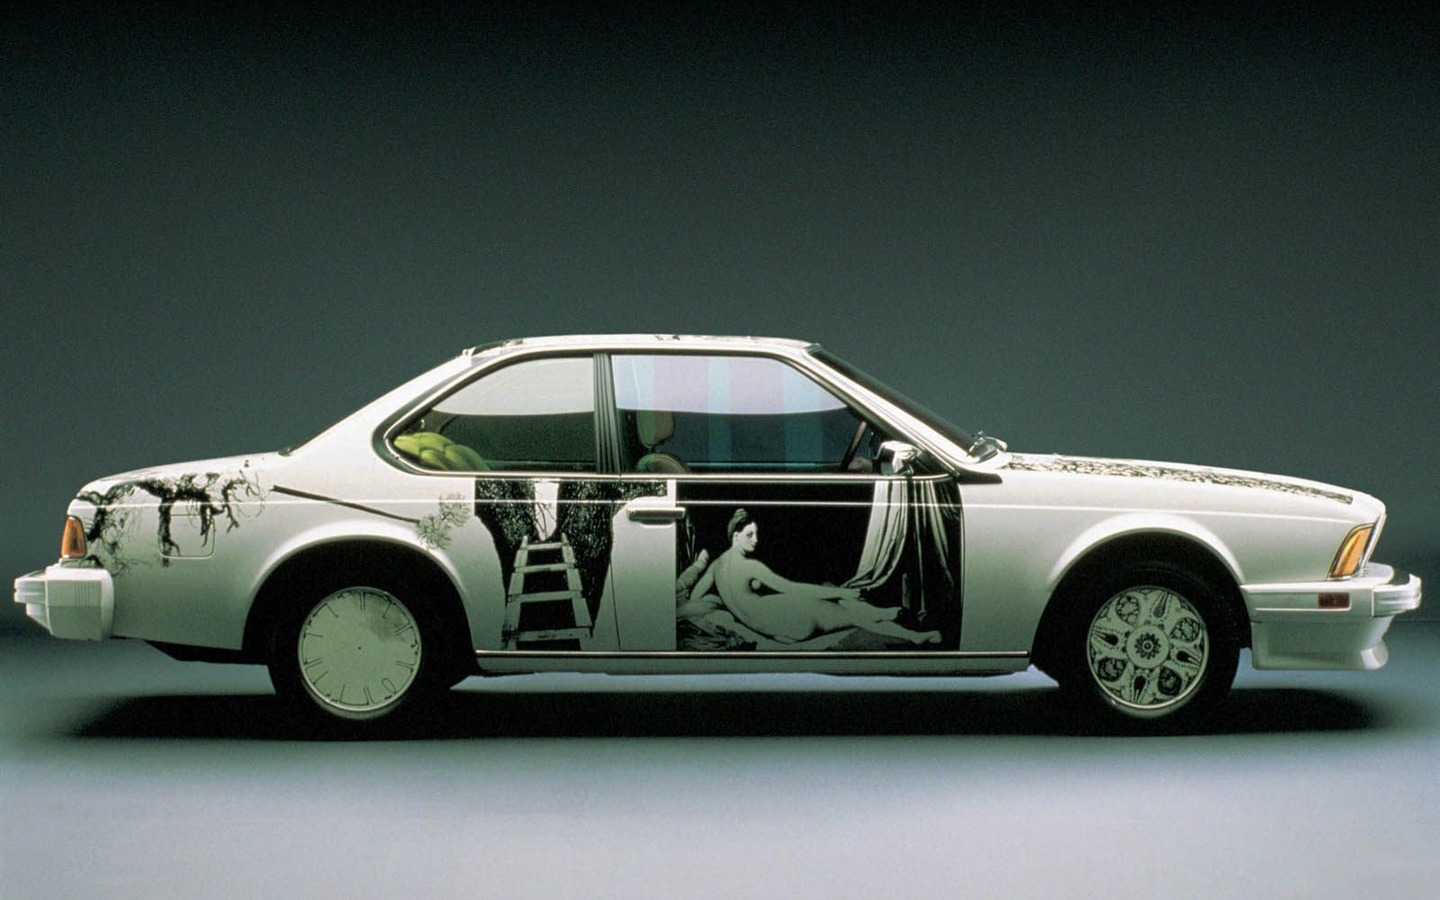  BMWは、ArtCarsの壁紙 #9 - 1440x900